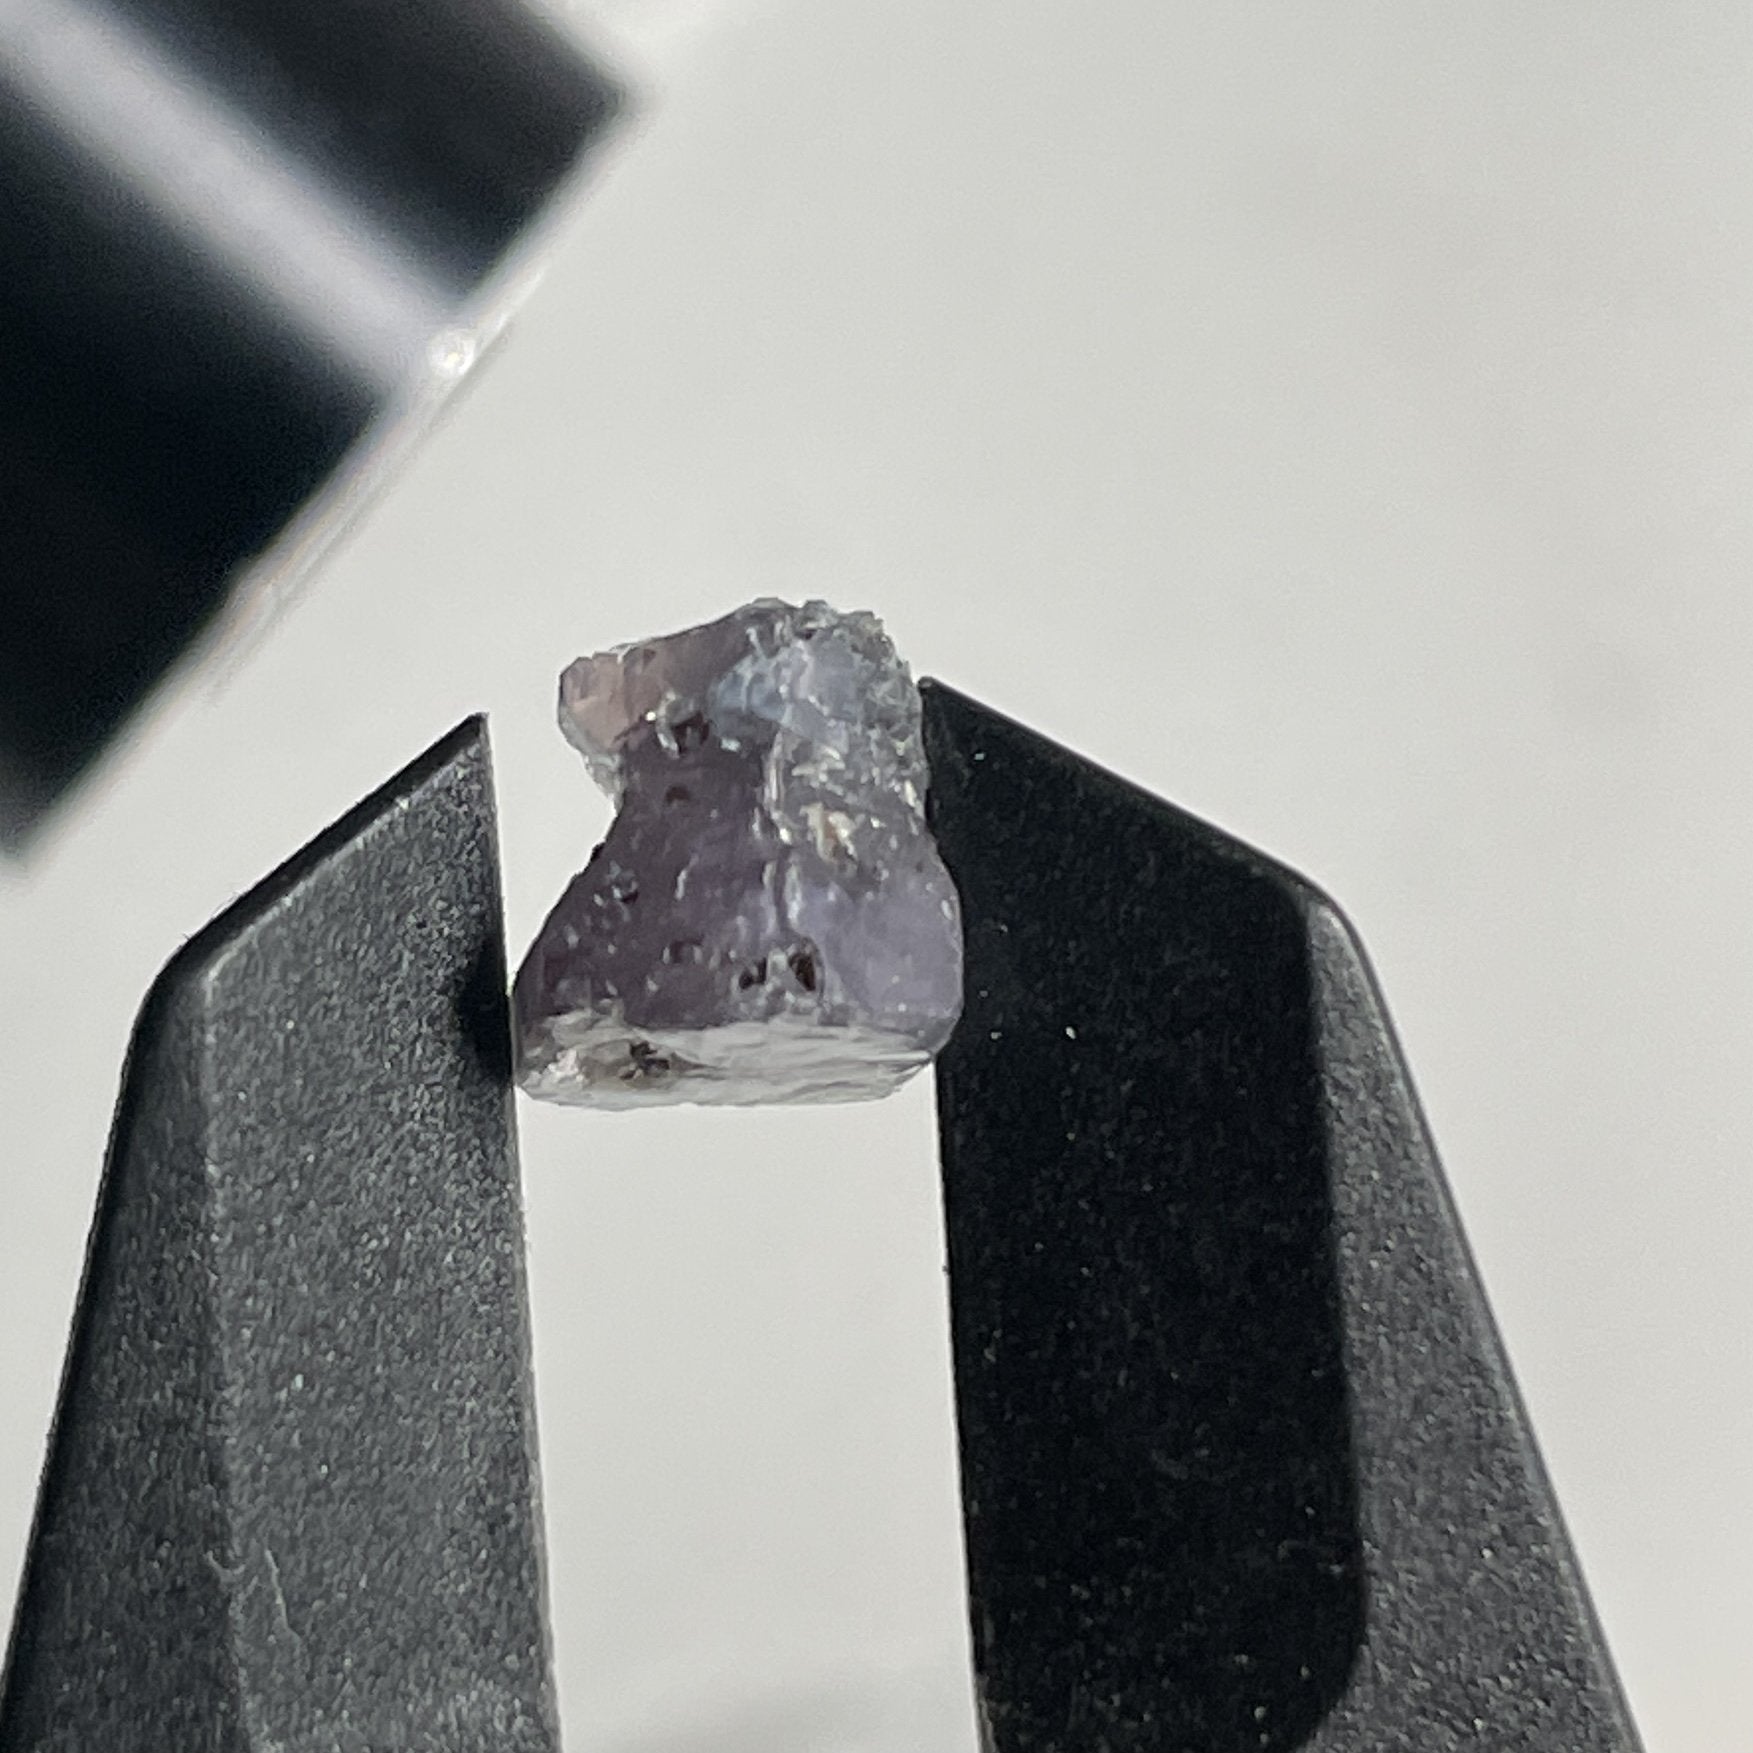 2.09Ct Alexandrite Crystal Tanzania Untreated Unheated. 7.5 X 5.1 4.6Mm